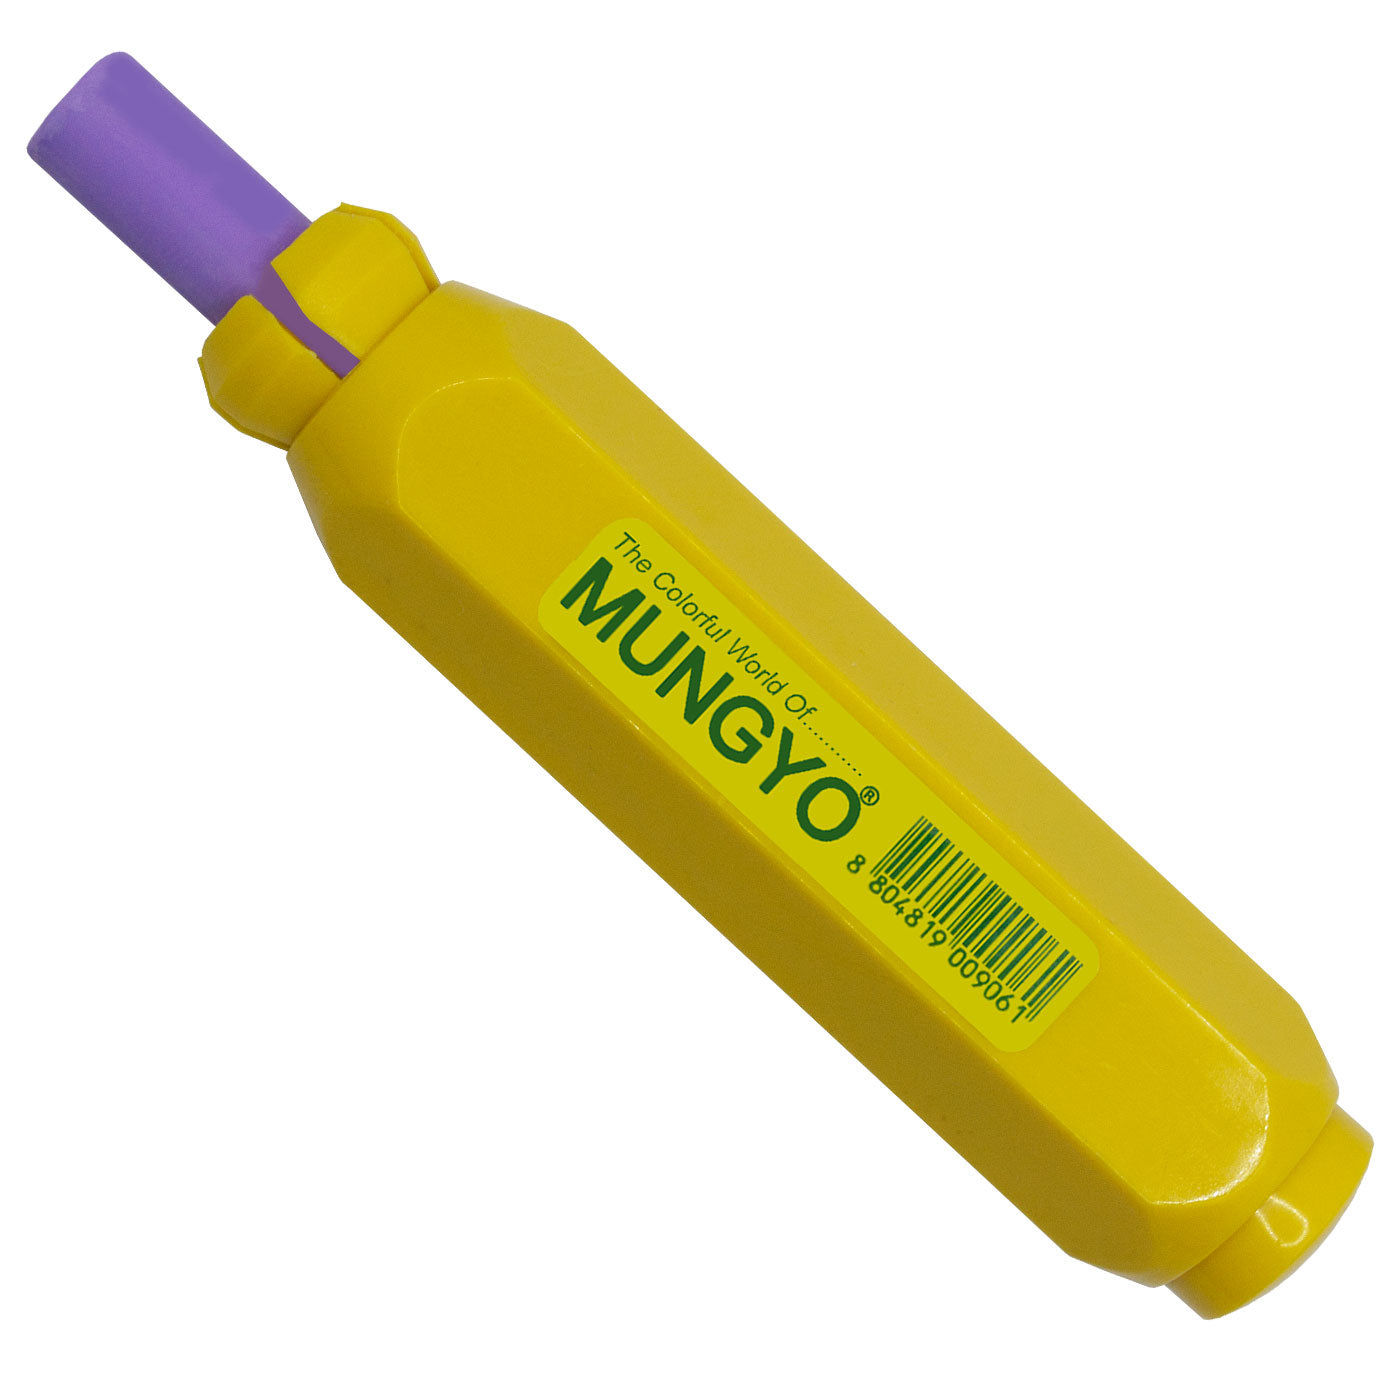 Mungyo Chalk Holder Magnetic Yellow